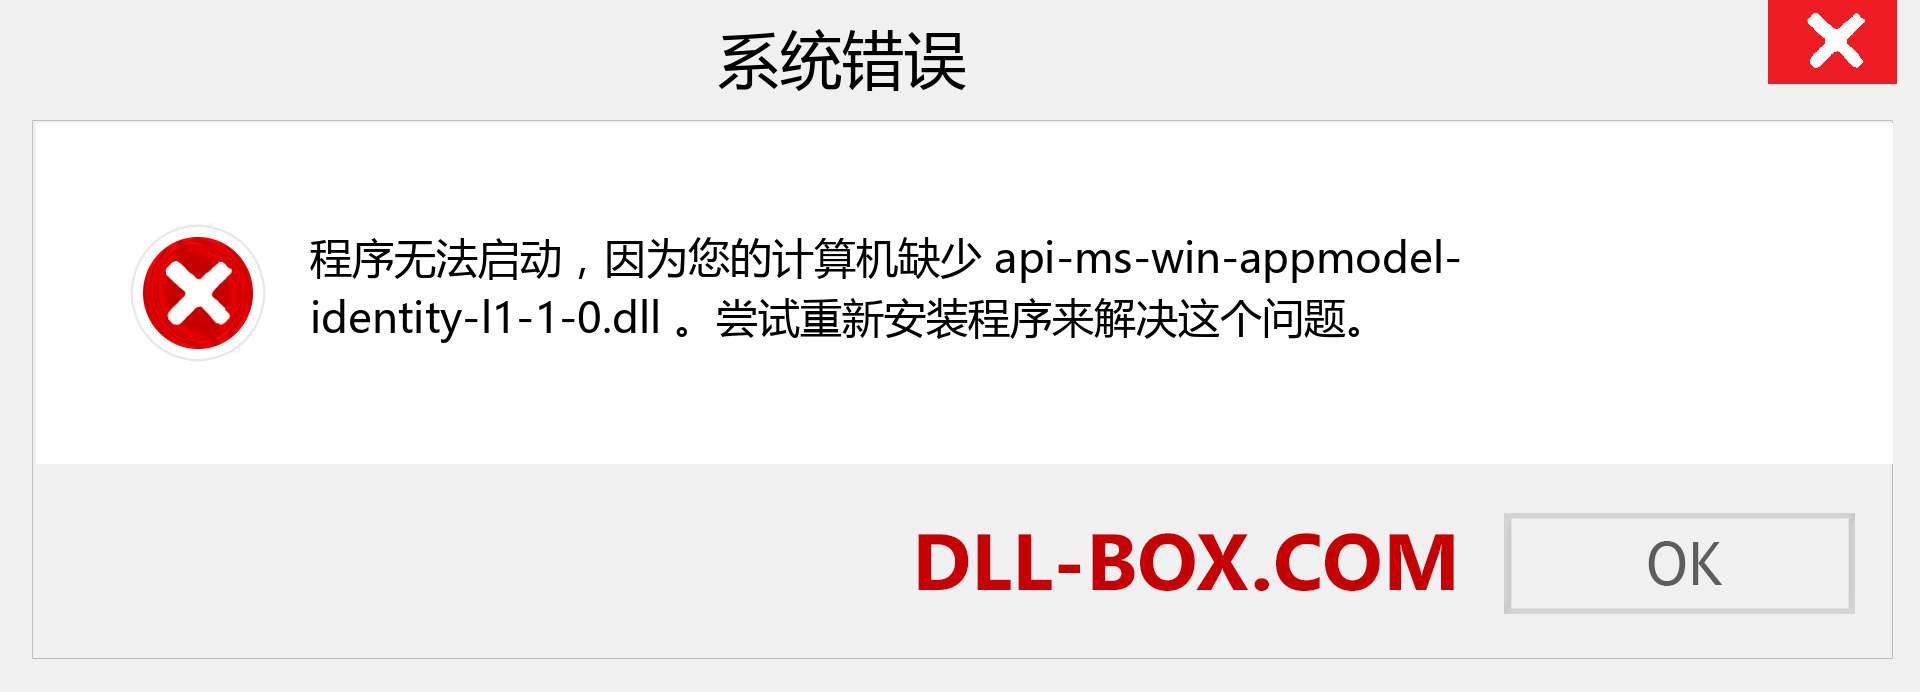 api-ms-win-appmodel-identity-l1-1-0.dll 文件丢失？。 适用于 Windows 7、8、10 的下载 - 修复 Windows、照片、图像上的 api-ms-win-appmodel-identity-l1-1-0 dll 丢失错误